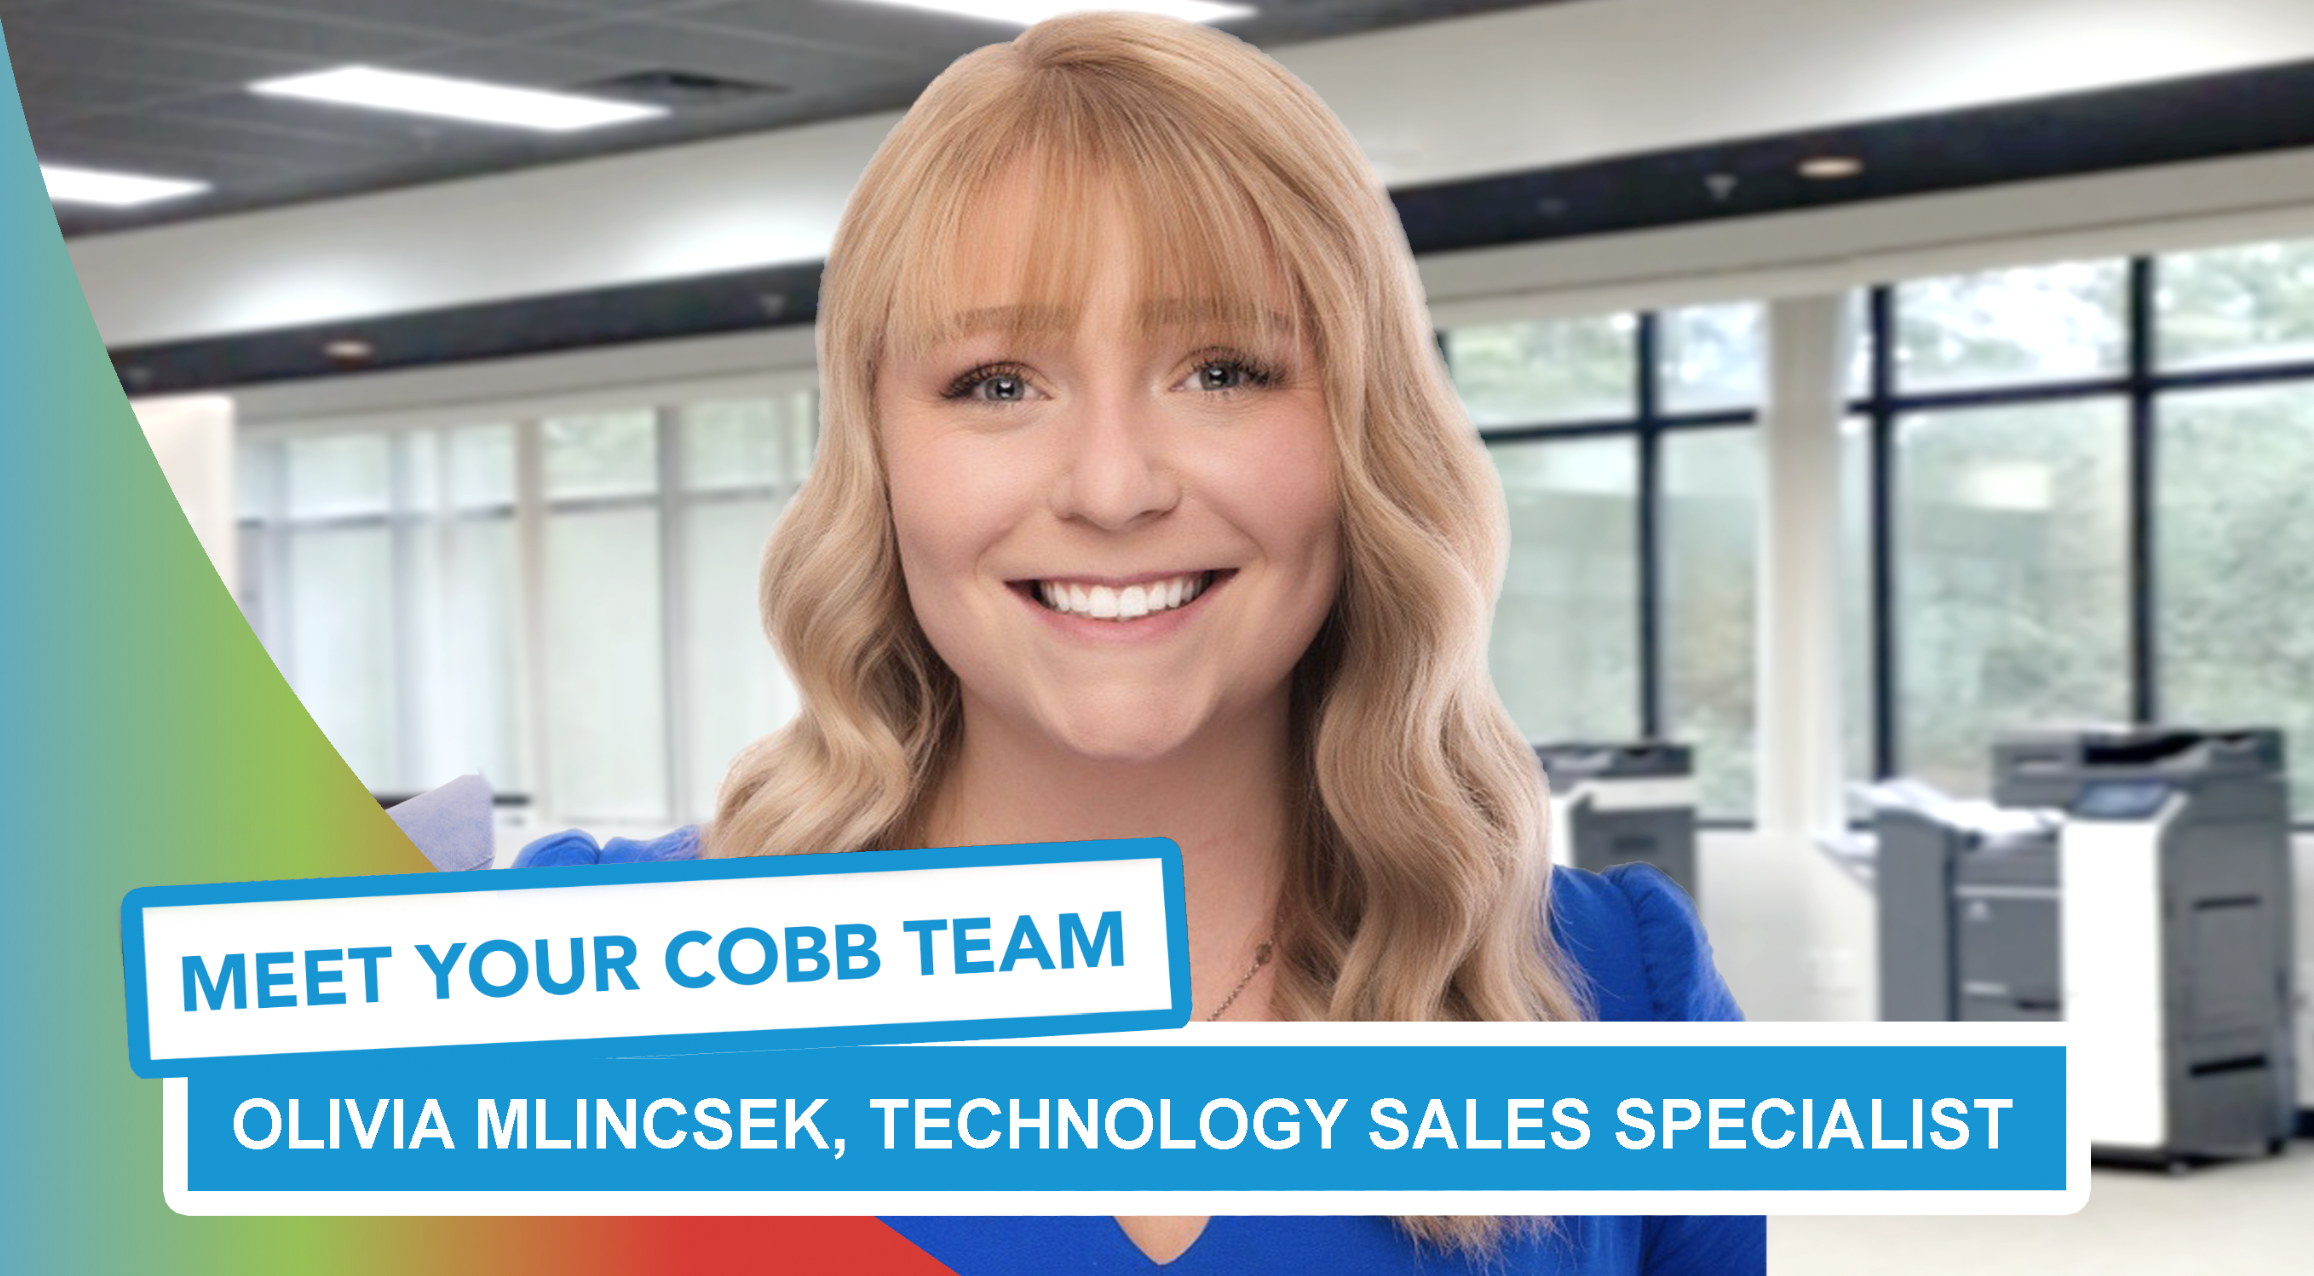 Meet Your Cobb Team: Olivia Mlincsek, Technology Sales Specialist